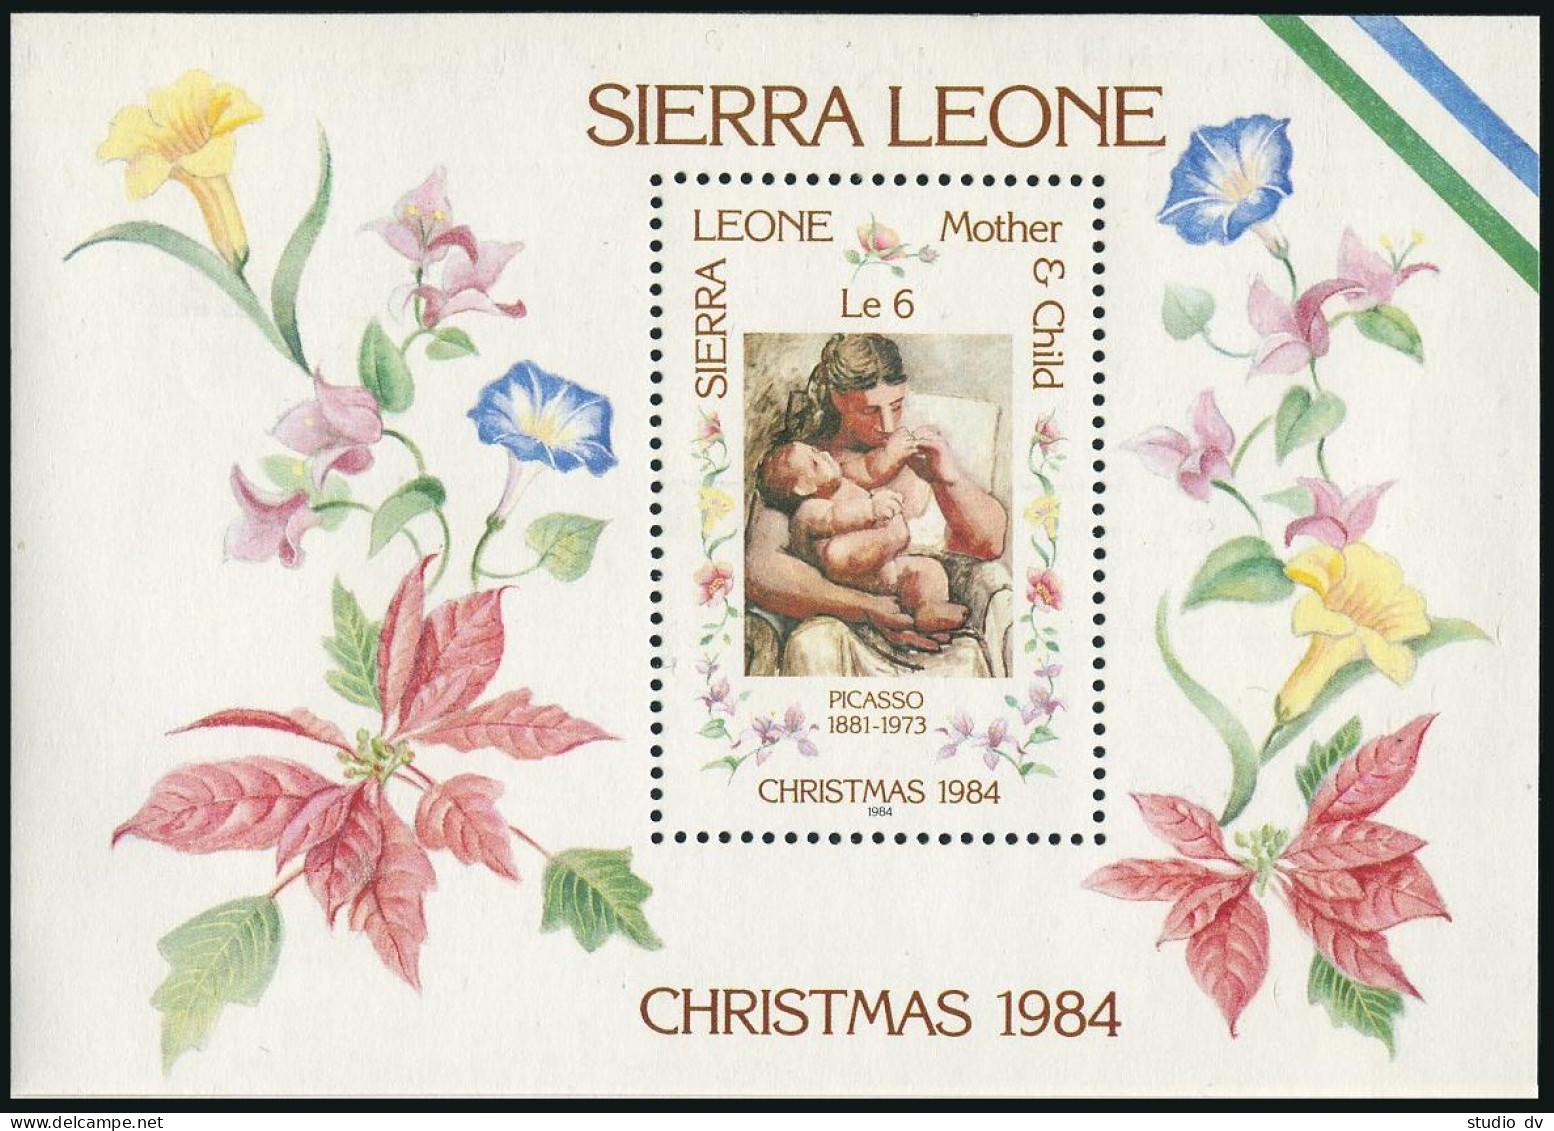 Sierra Leone 670, MNH. Michel 788 Bl.25. Christmas 1984. Picasso. - Sierra Leone (1961-...)